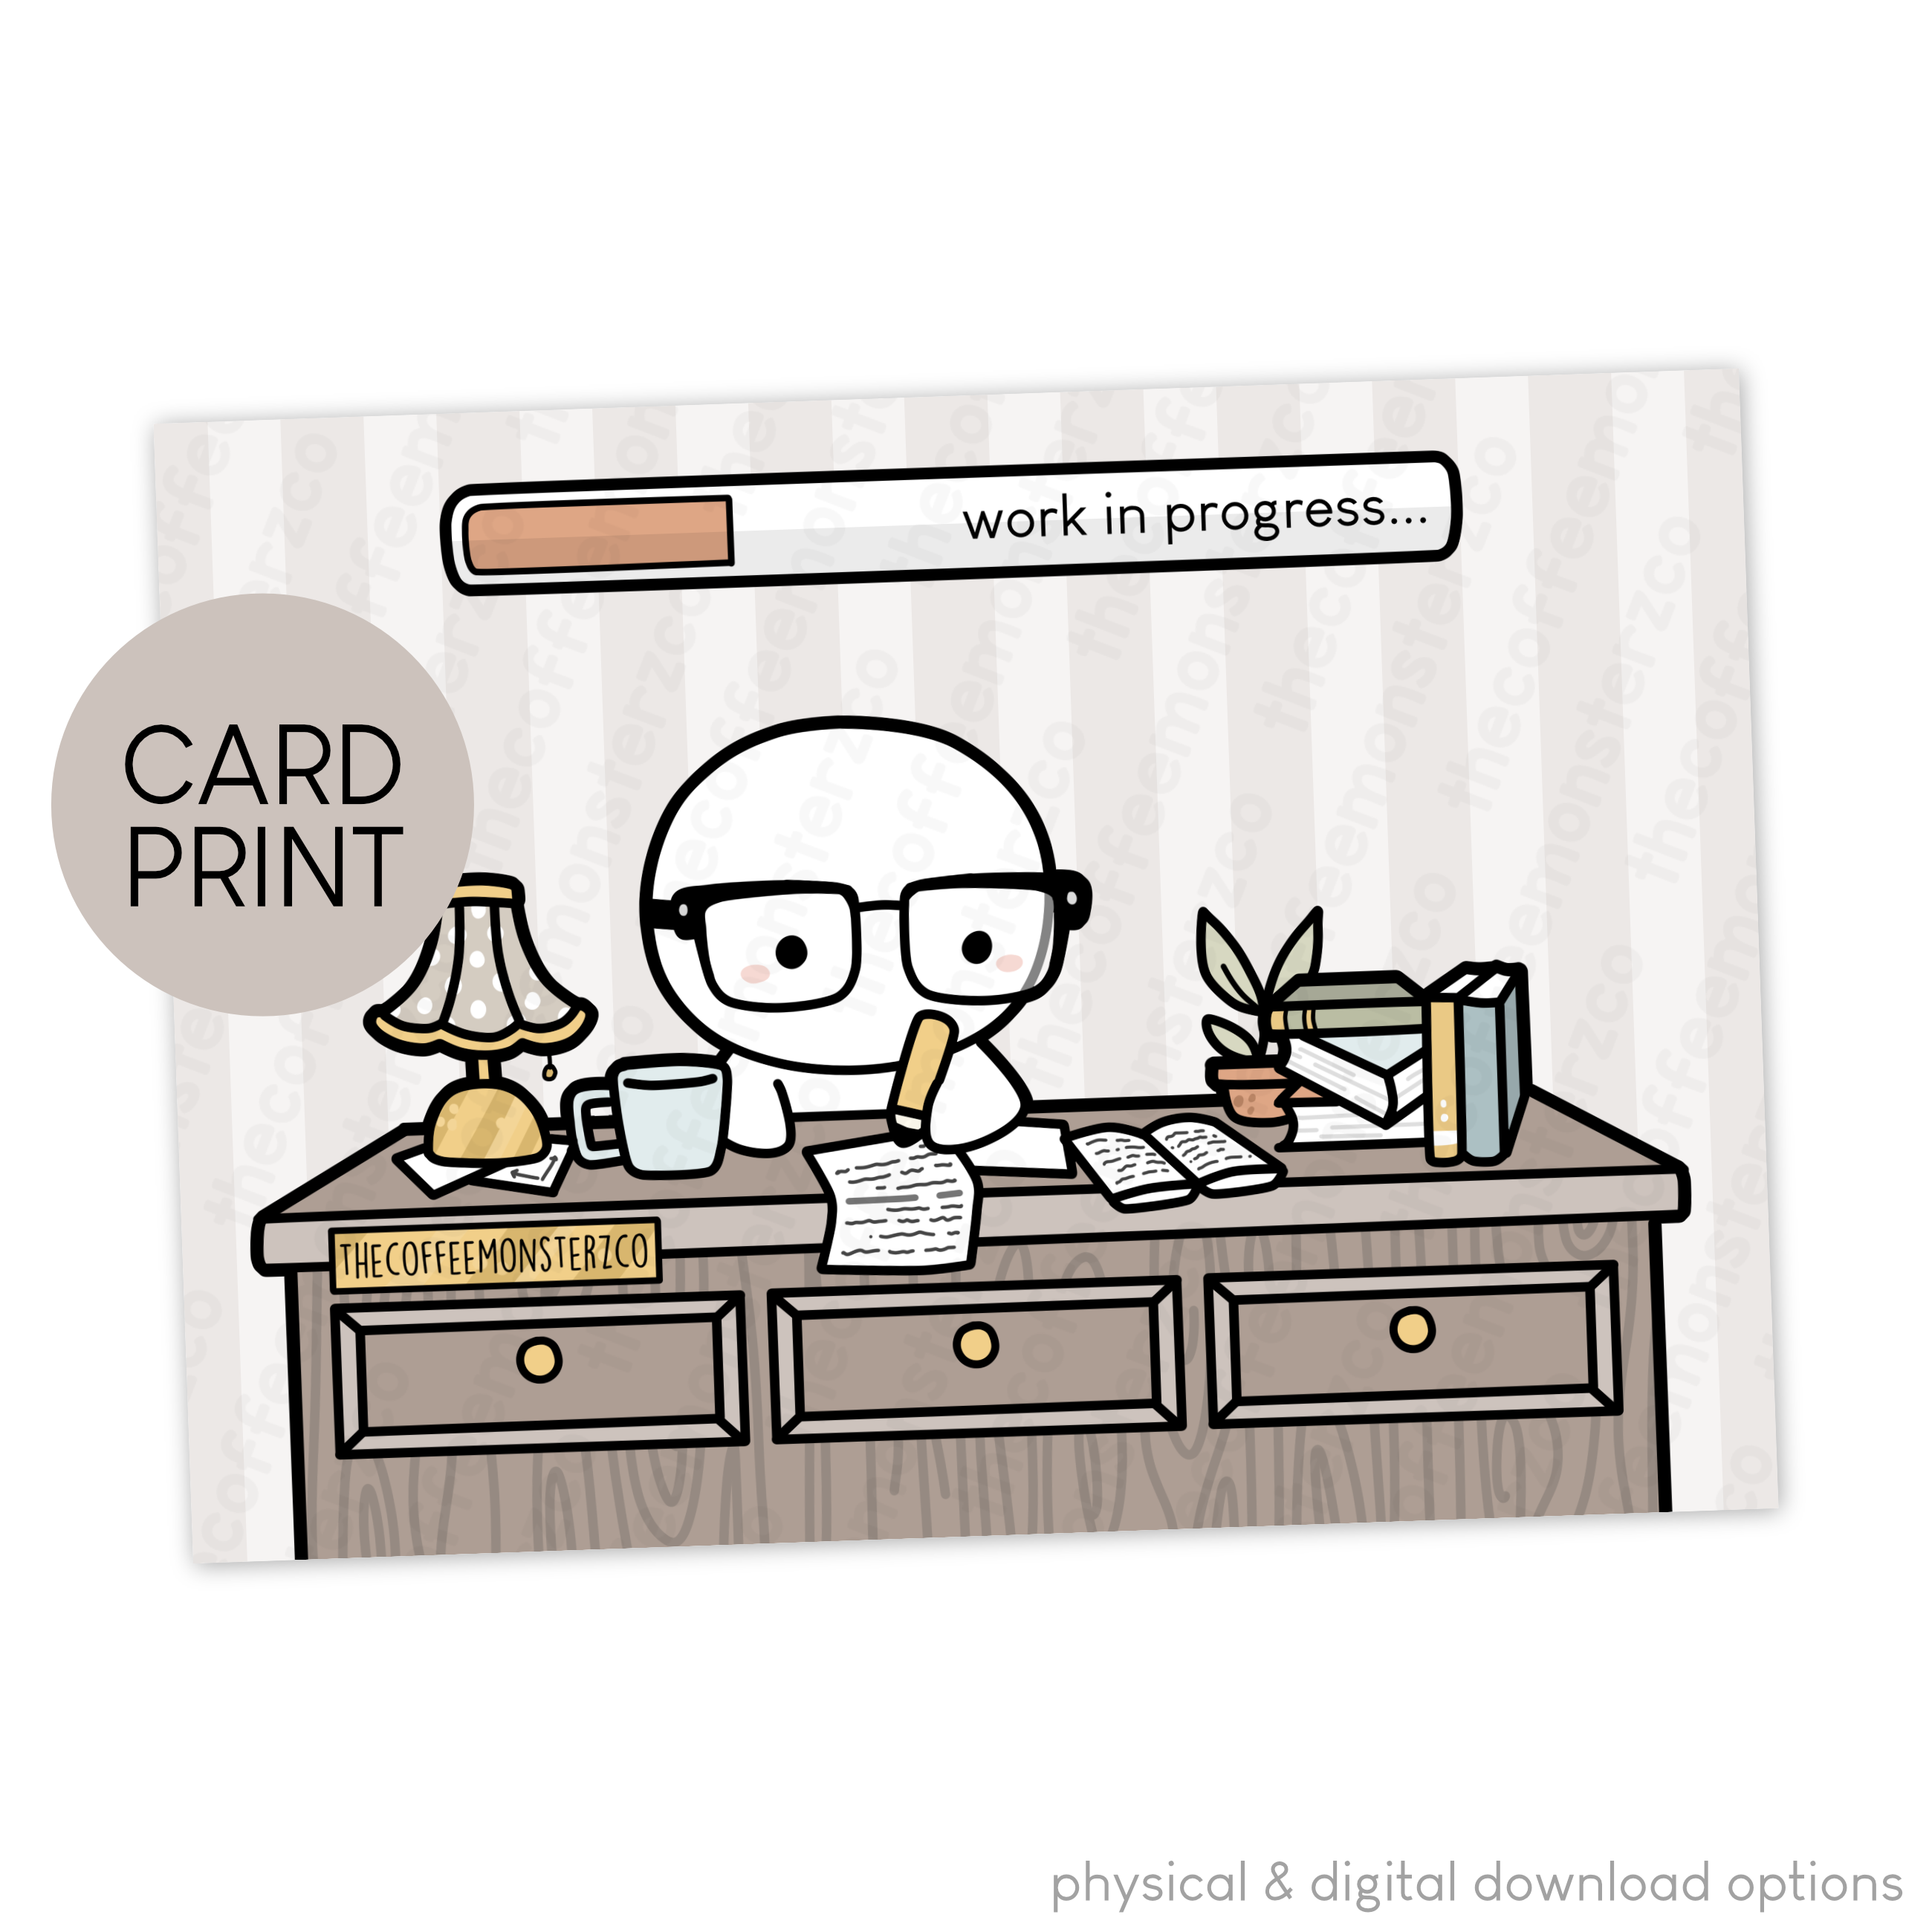 Work In Progress - Card Print